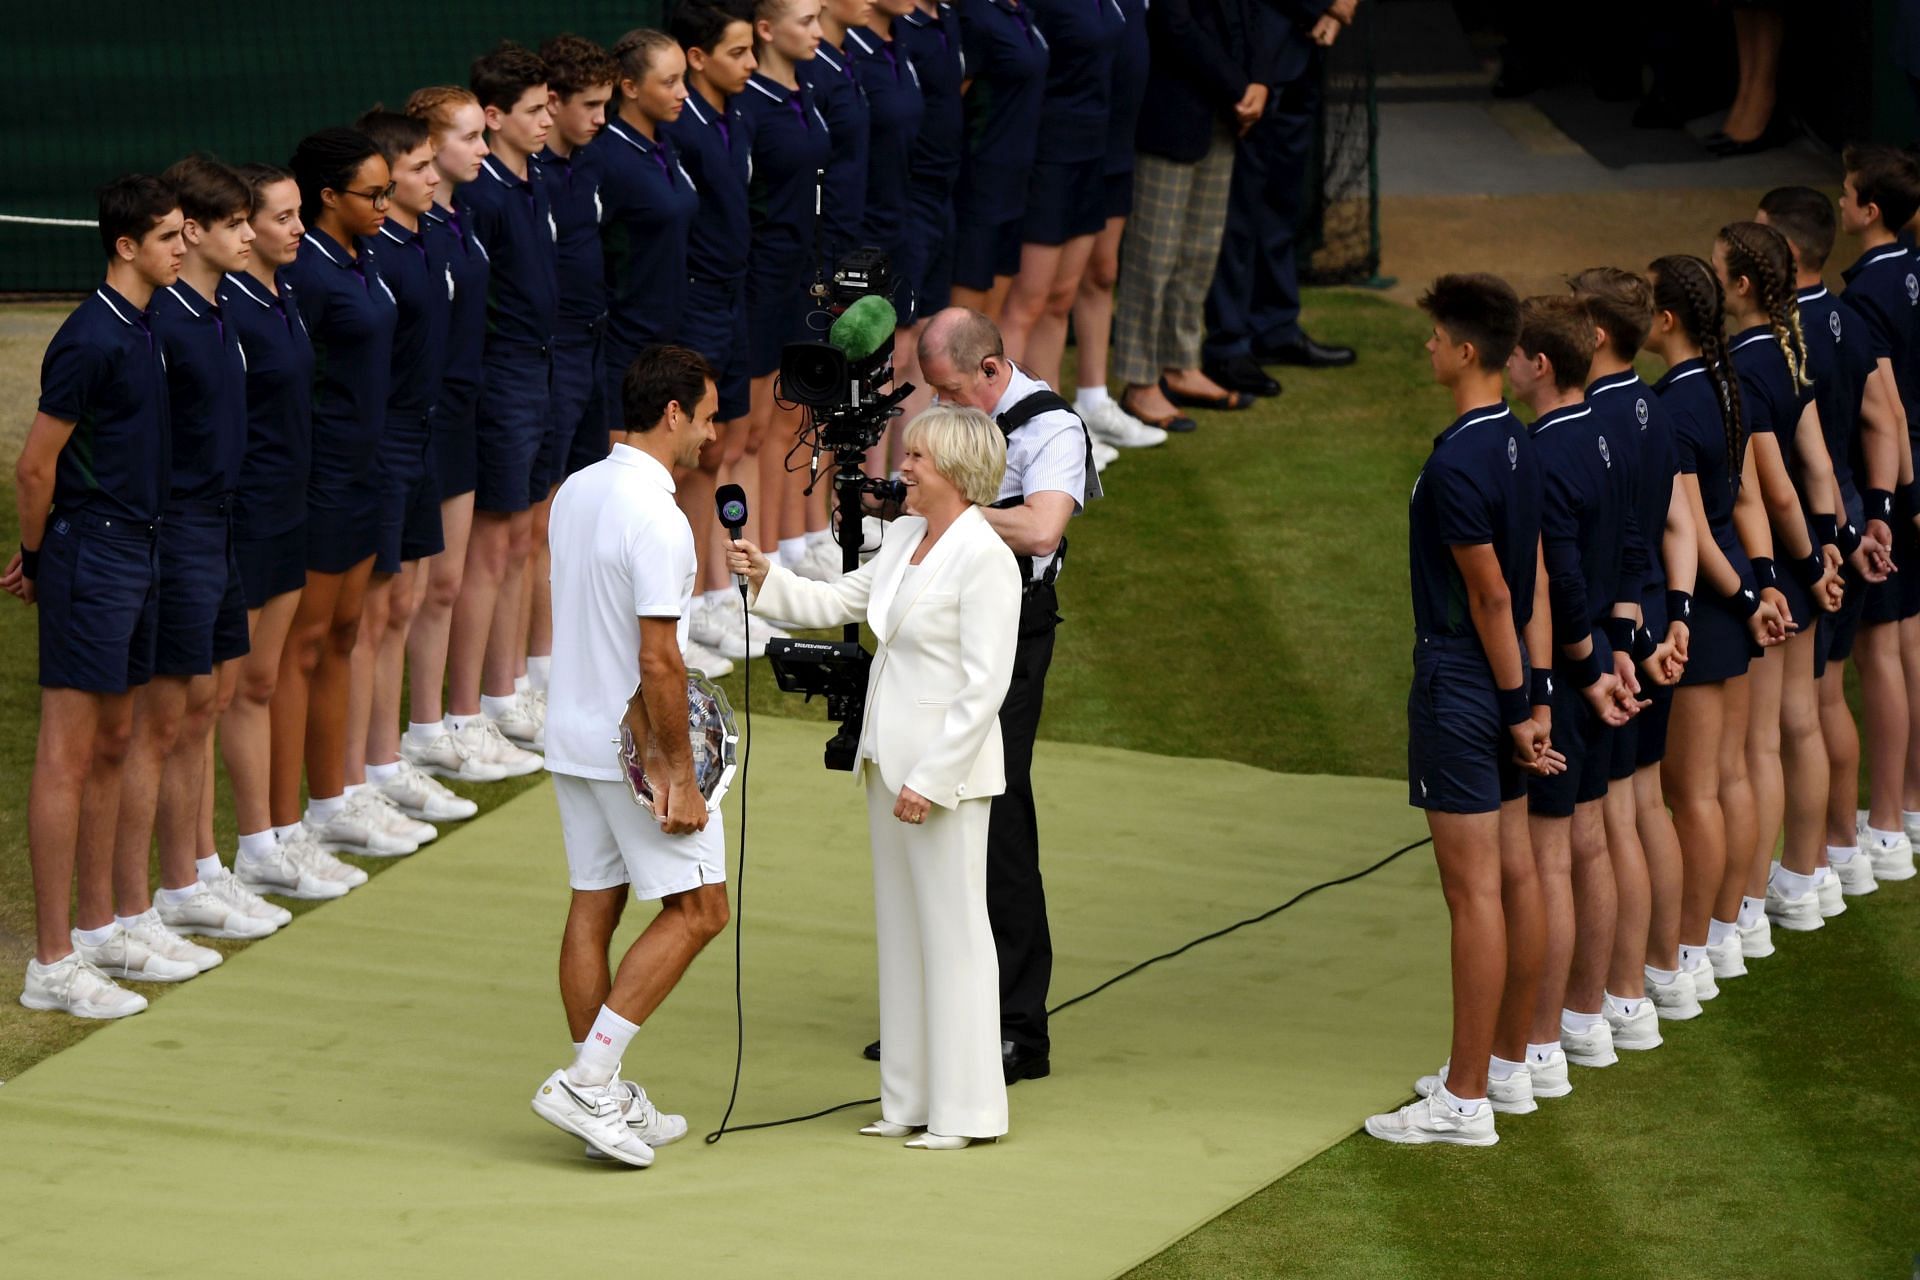 Sue Barker interviews Roger Federer at the 2019 Wimbledon Championships.